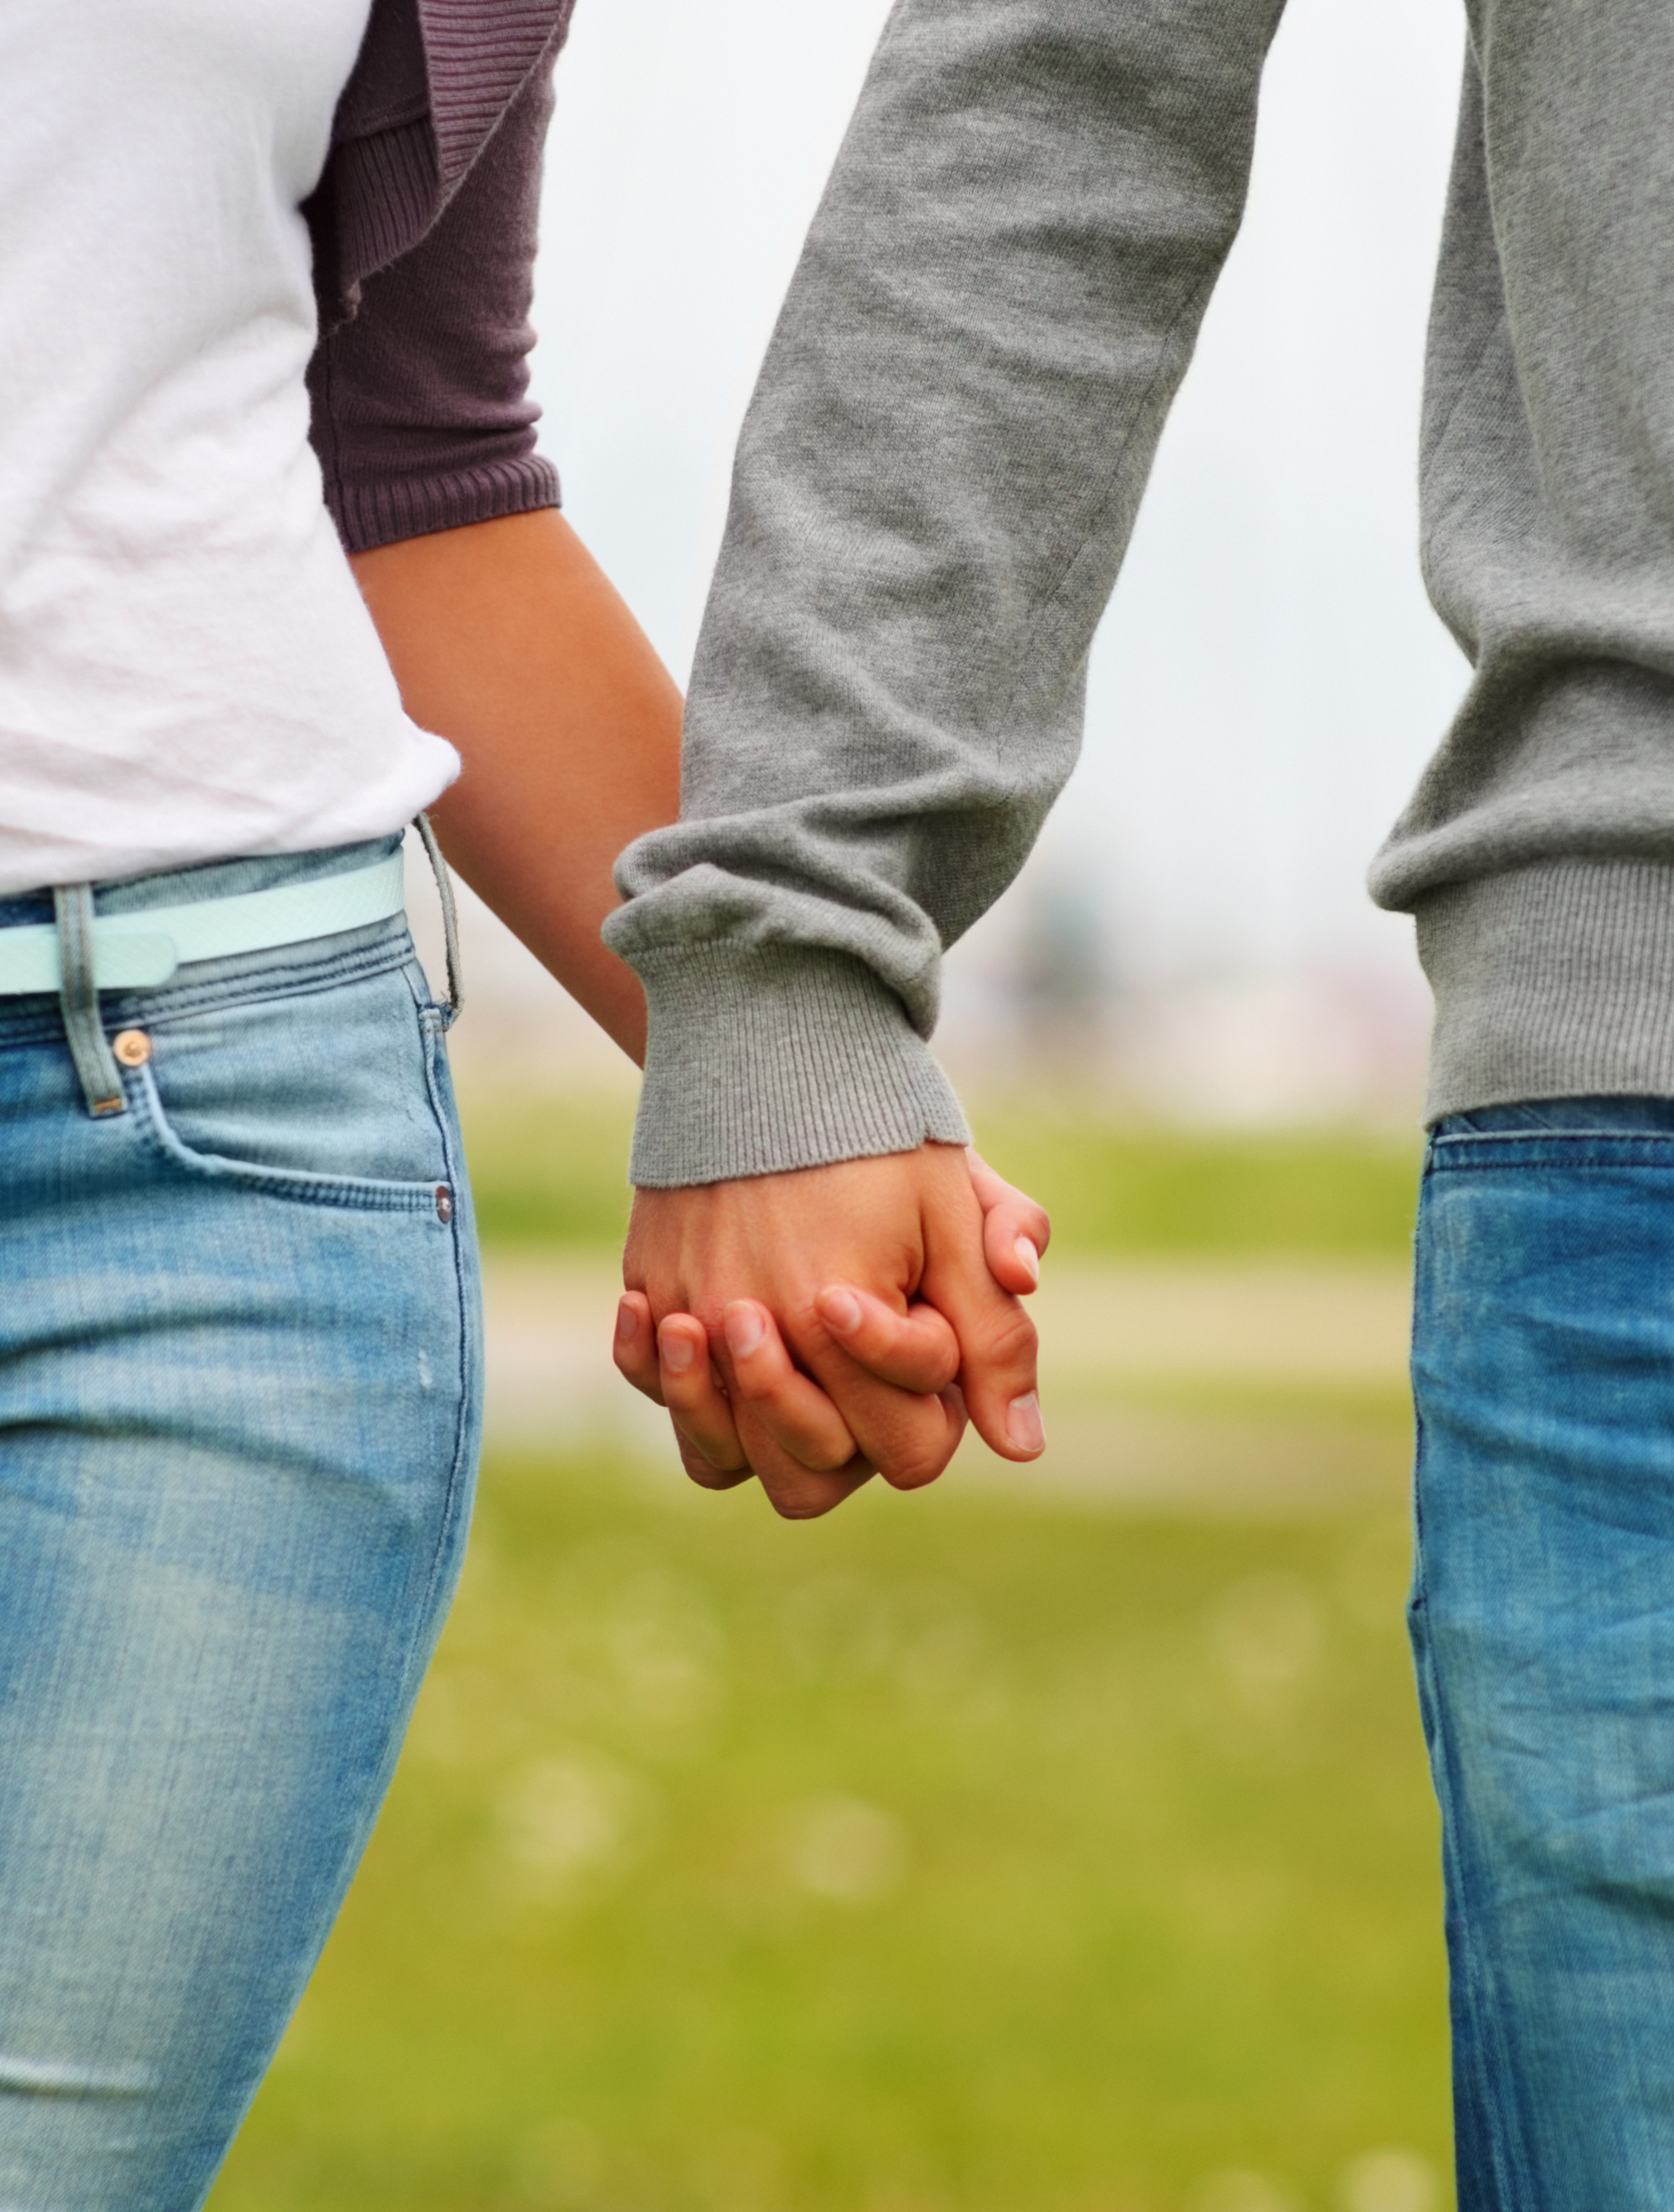 Couples Holding Hands | Viralnova